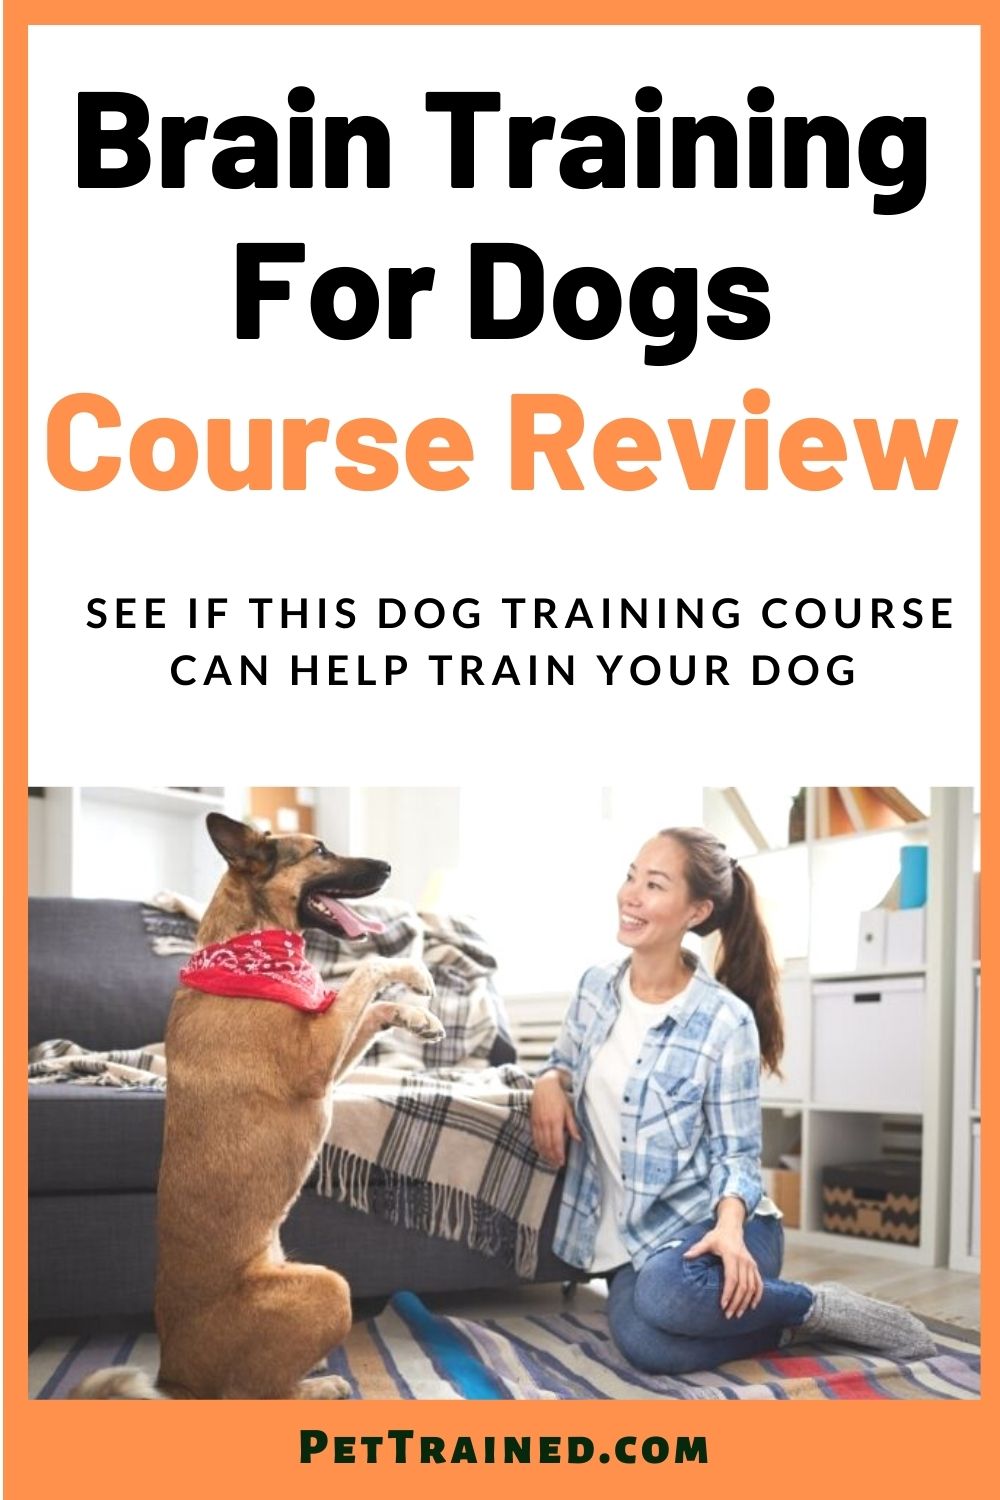 Brain training for dogs training program review